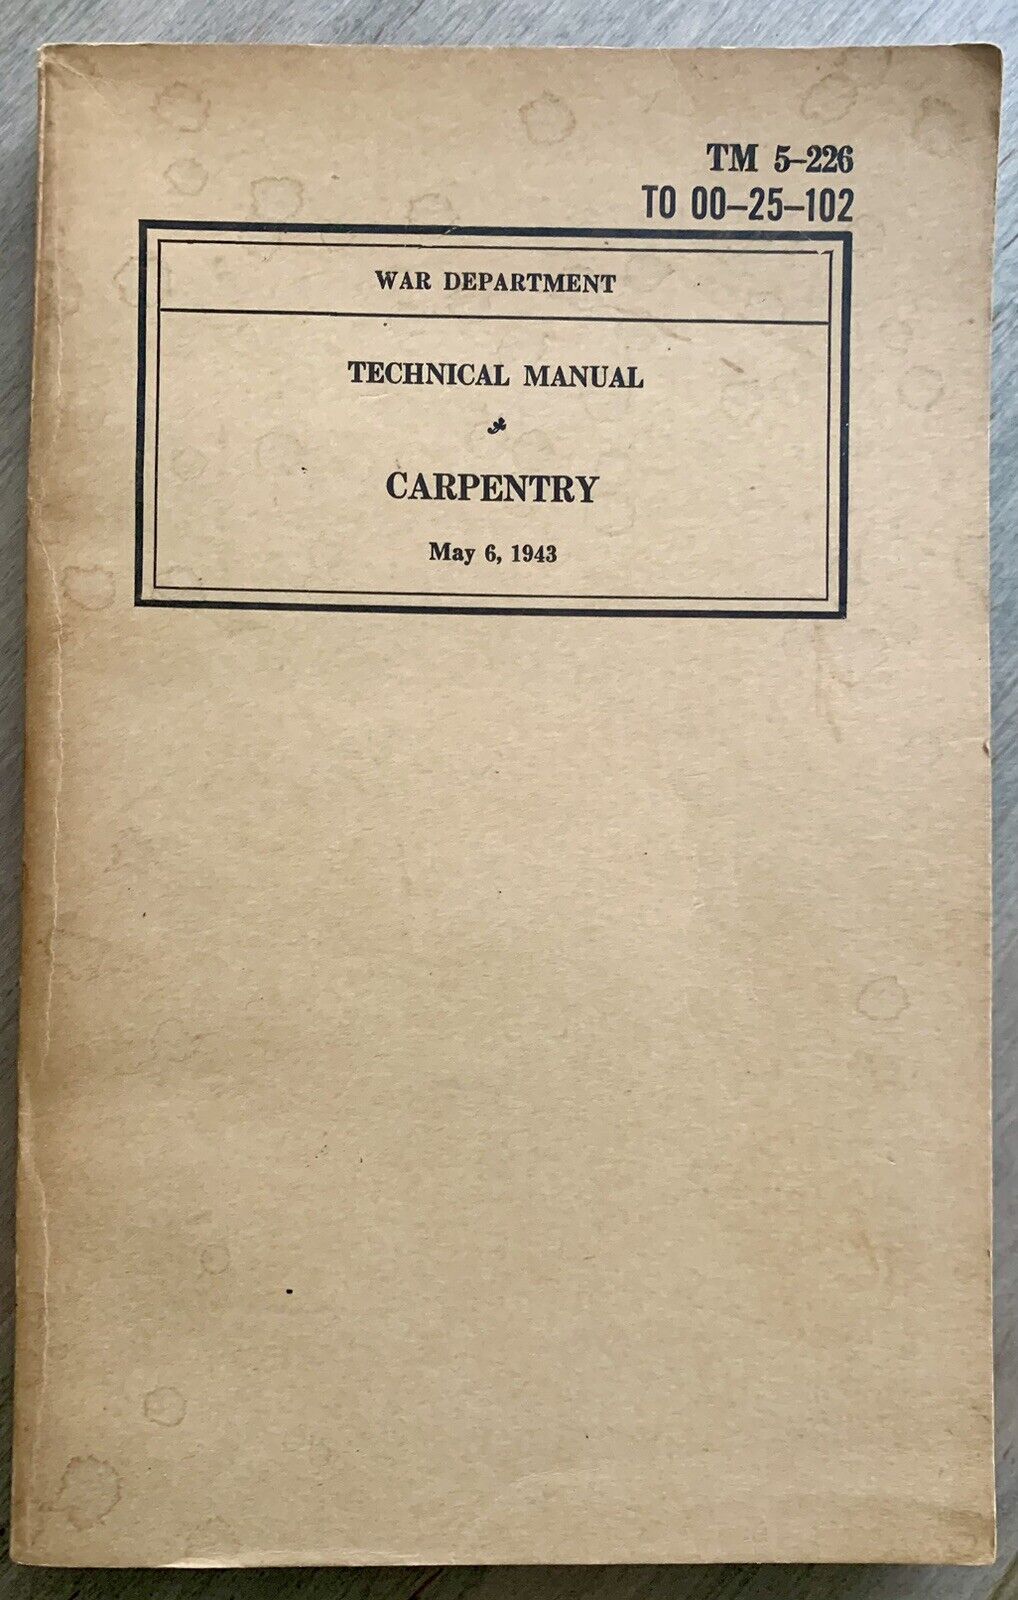 War Department Technical Manual Carpentry - 1949 Printing